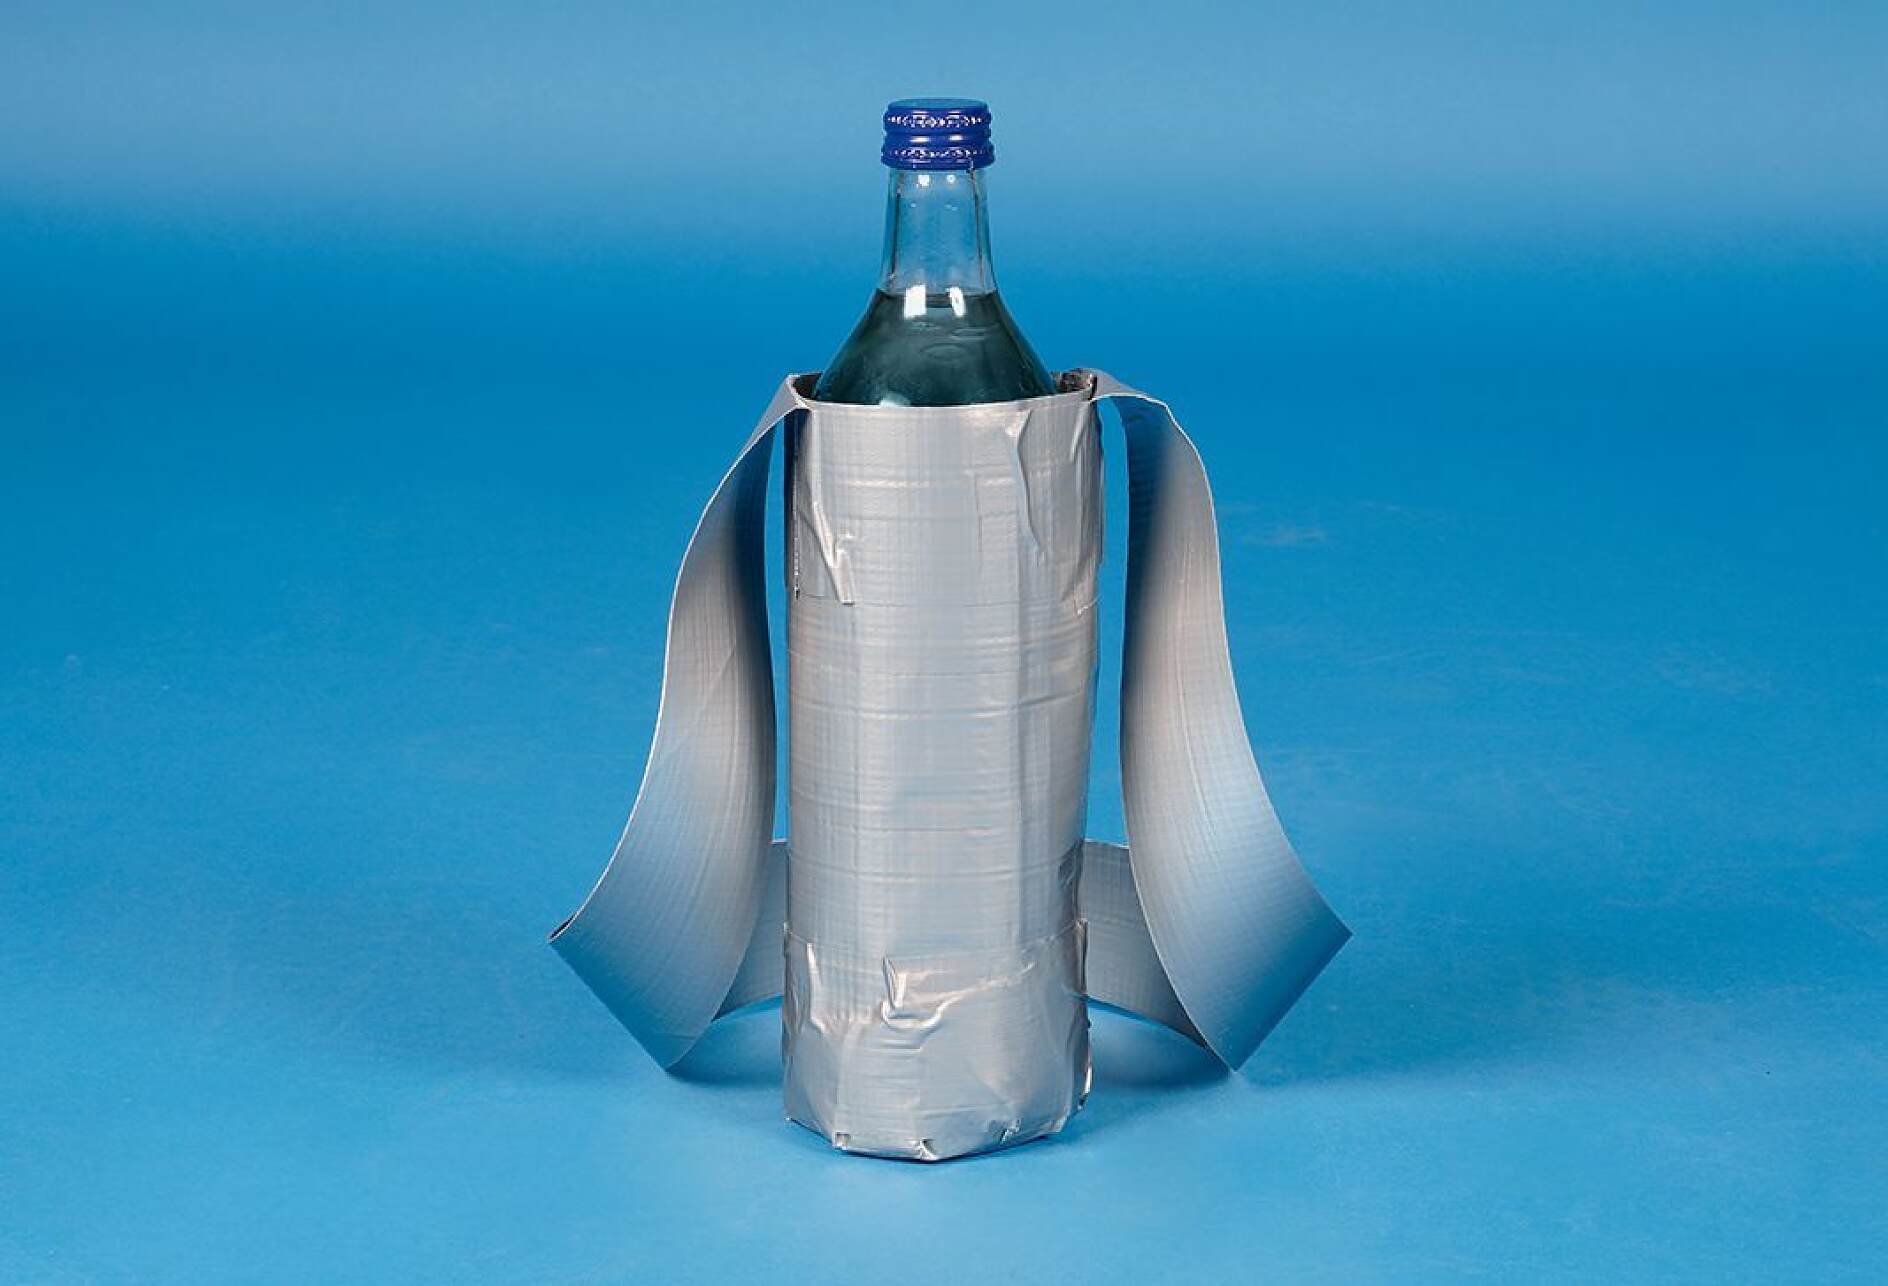 Duct Tape Water Bottle Holder